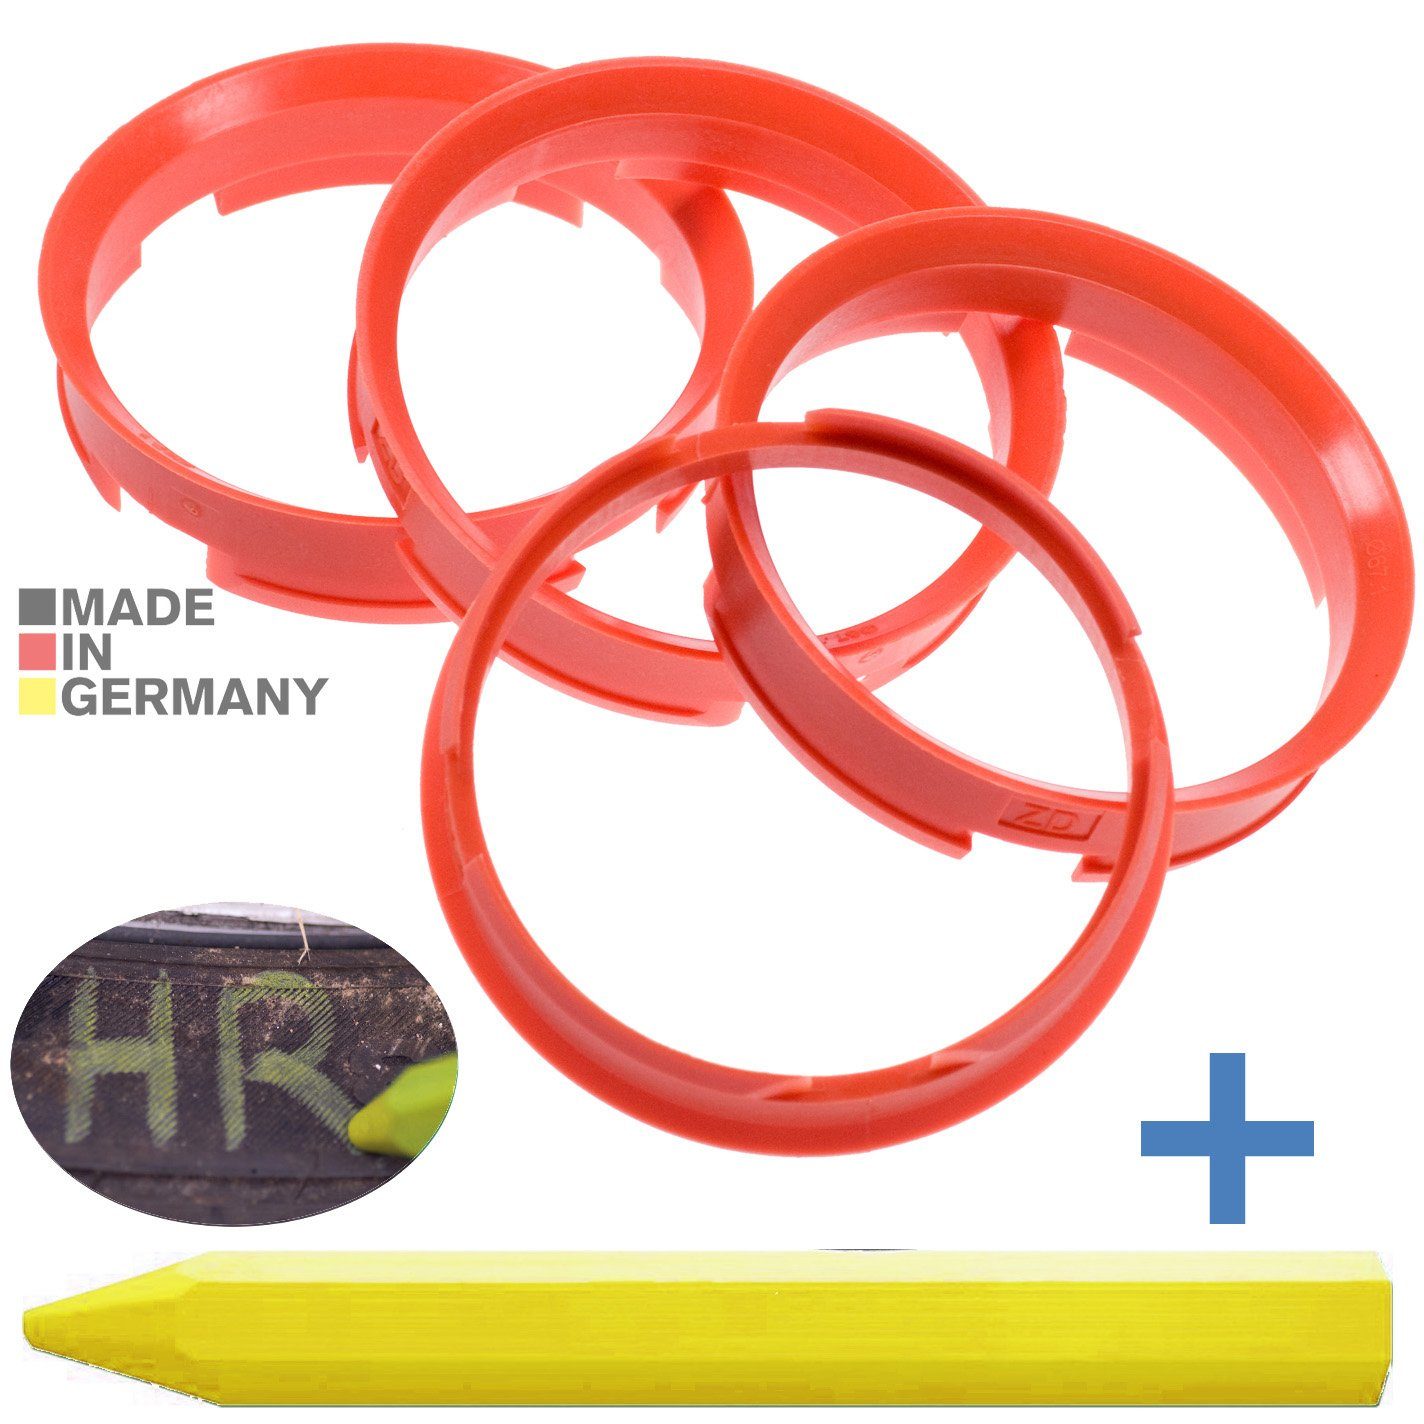 RKC Reifenstift 4X Zentrierringe Orange Felgen Ringe + 1x Reifen Kreide Fett Stift, Maße: 72,6 x 67,1 mm